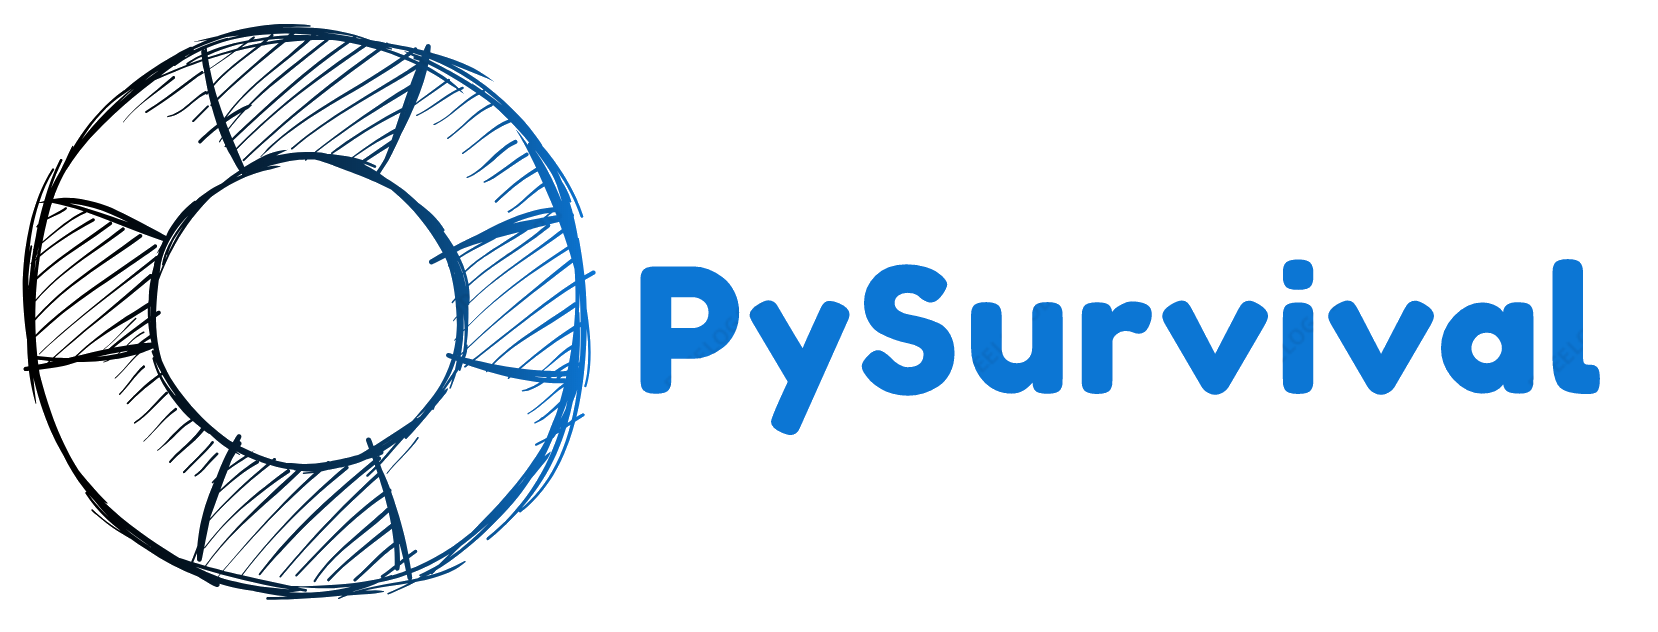 pysurvival_logo